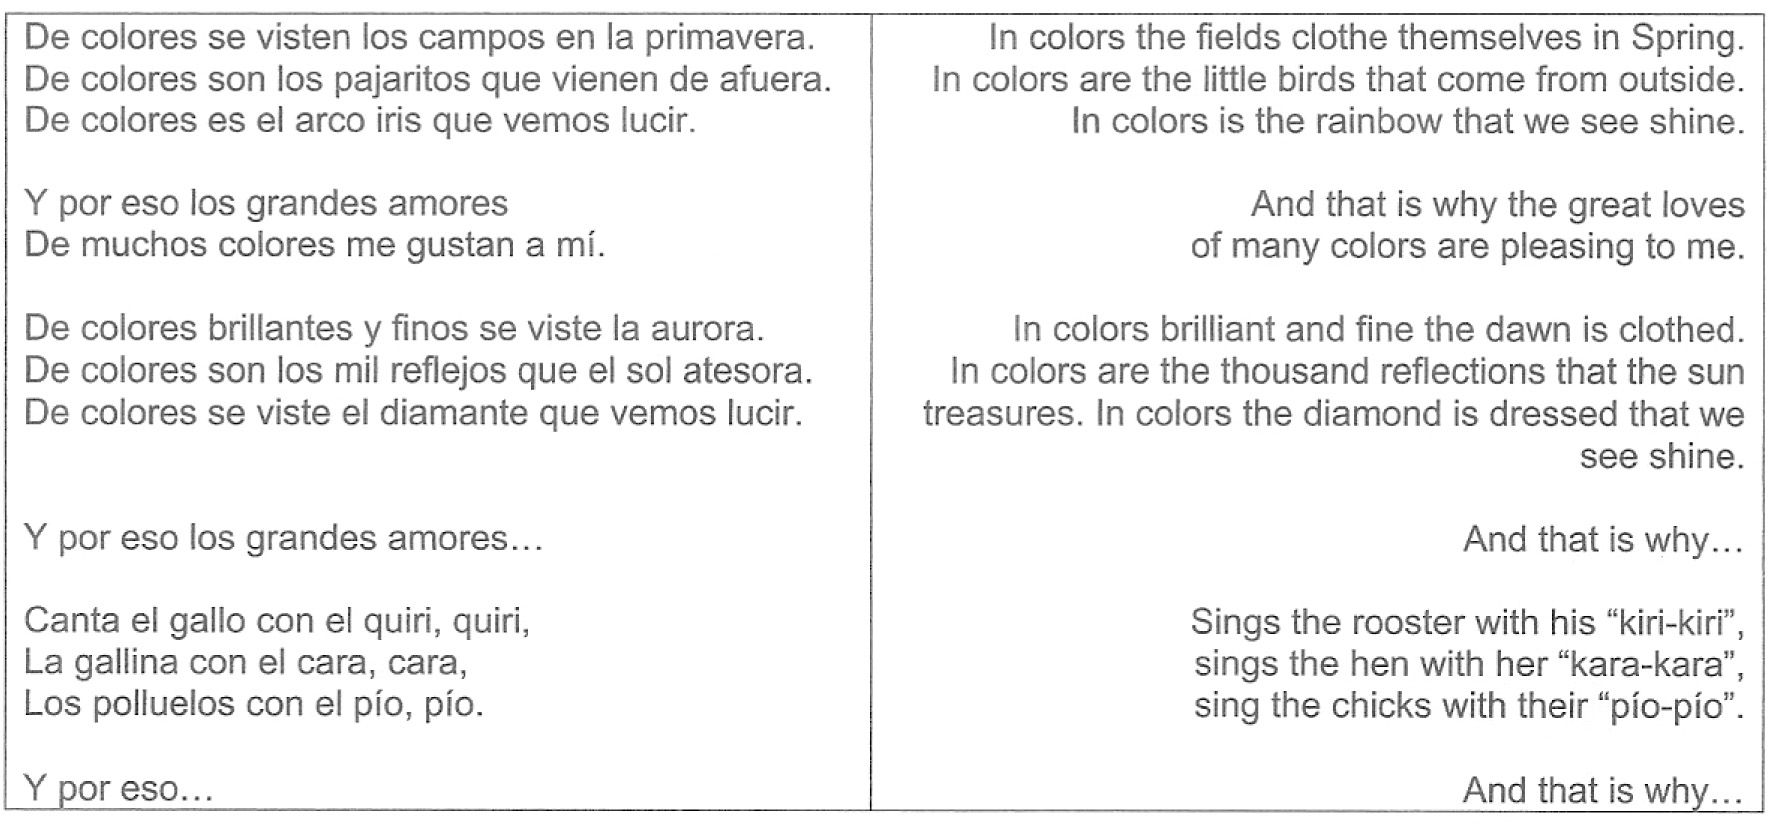 AURORA lyrics with translations